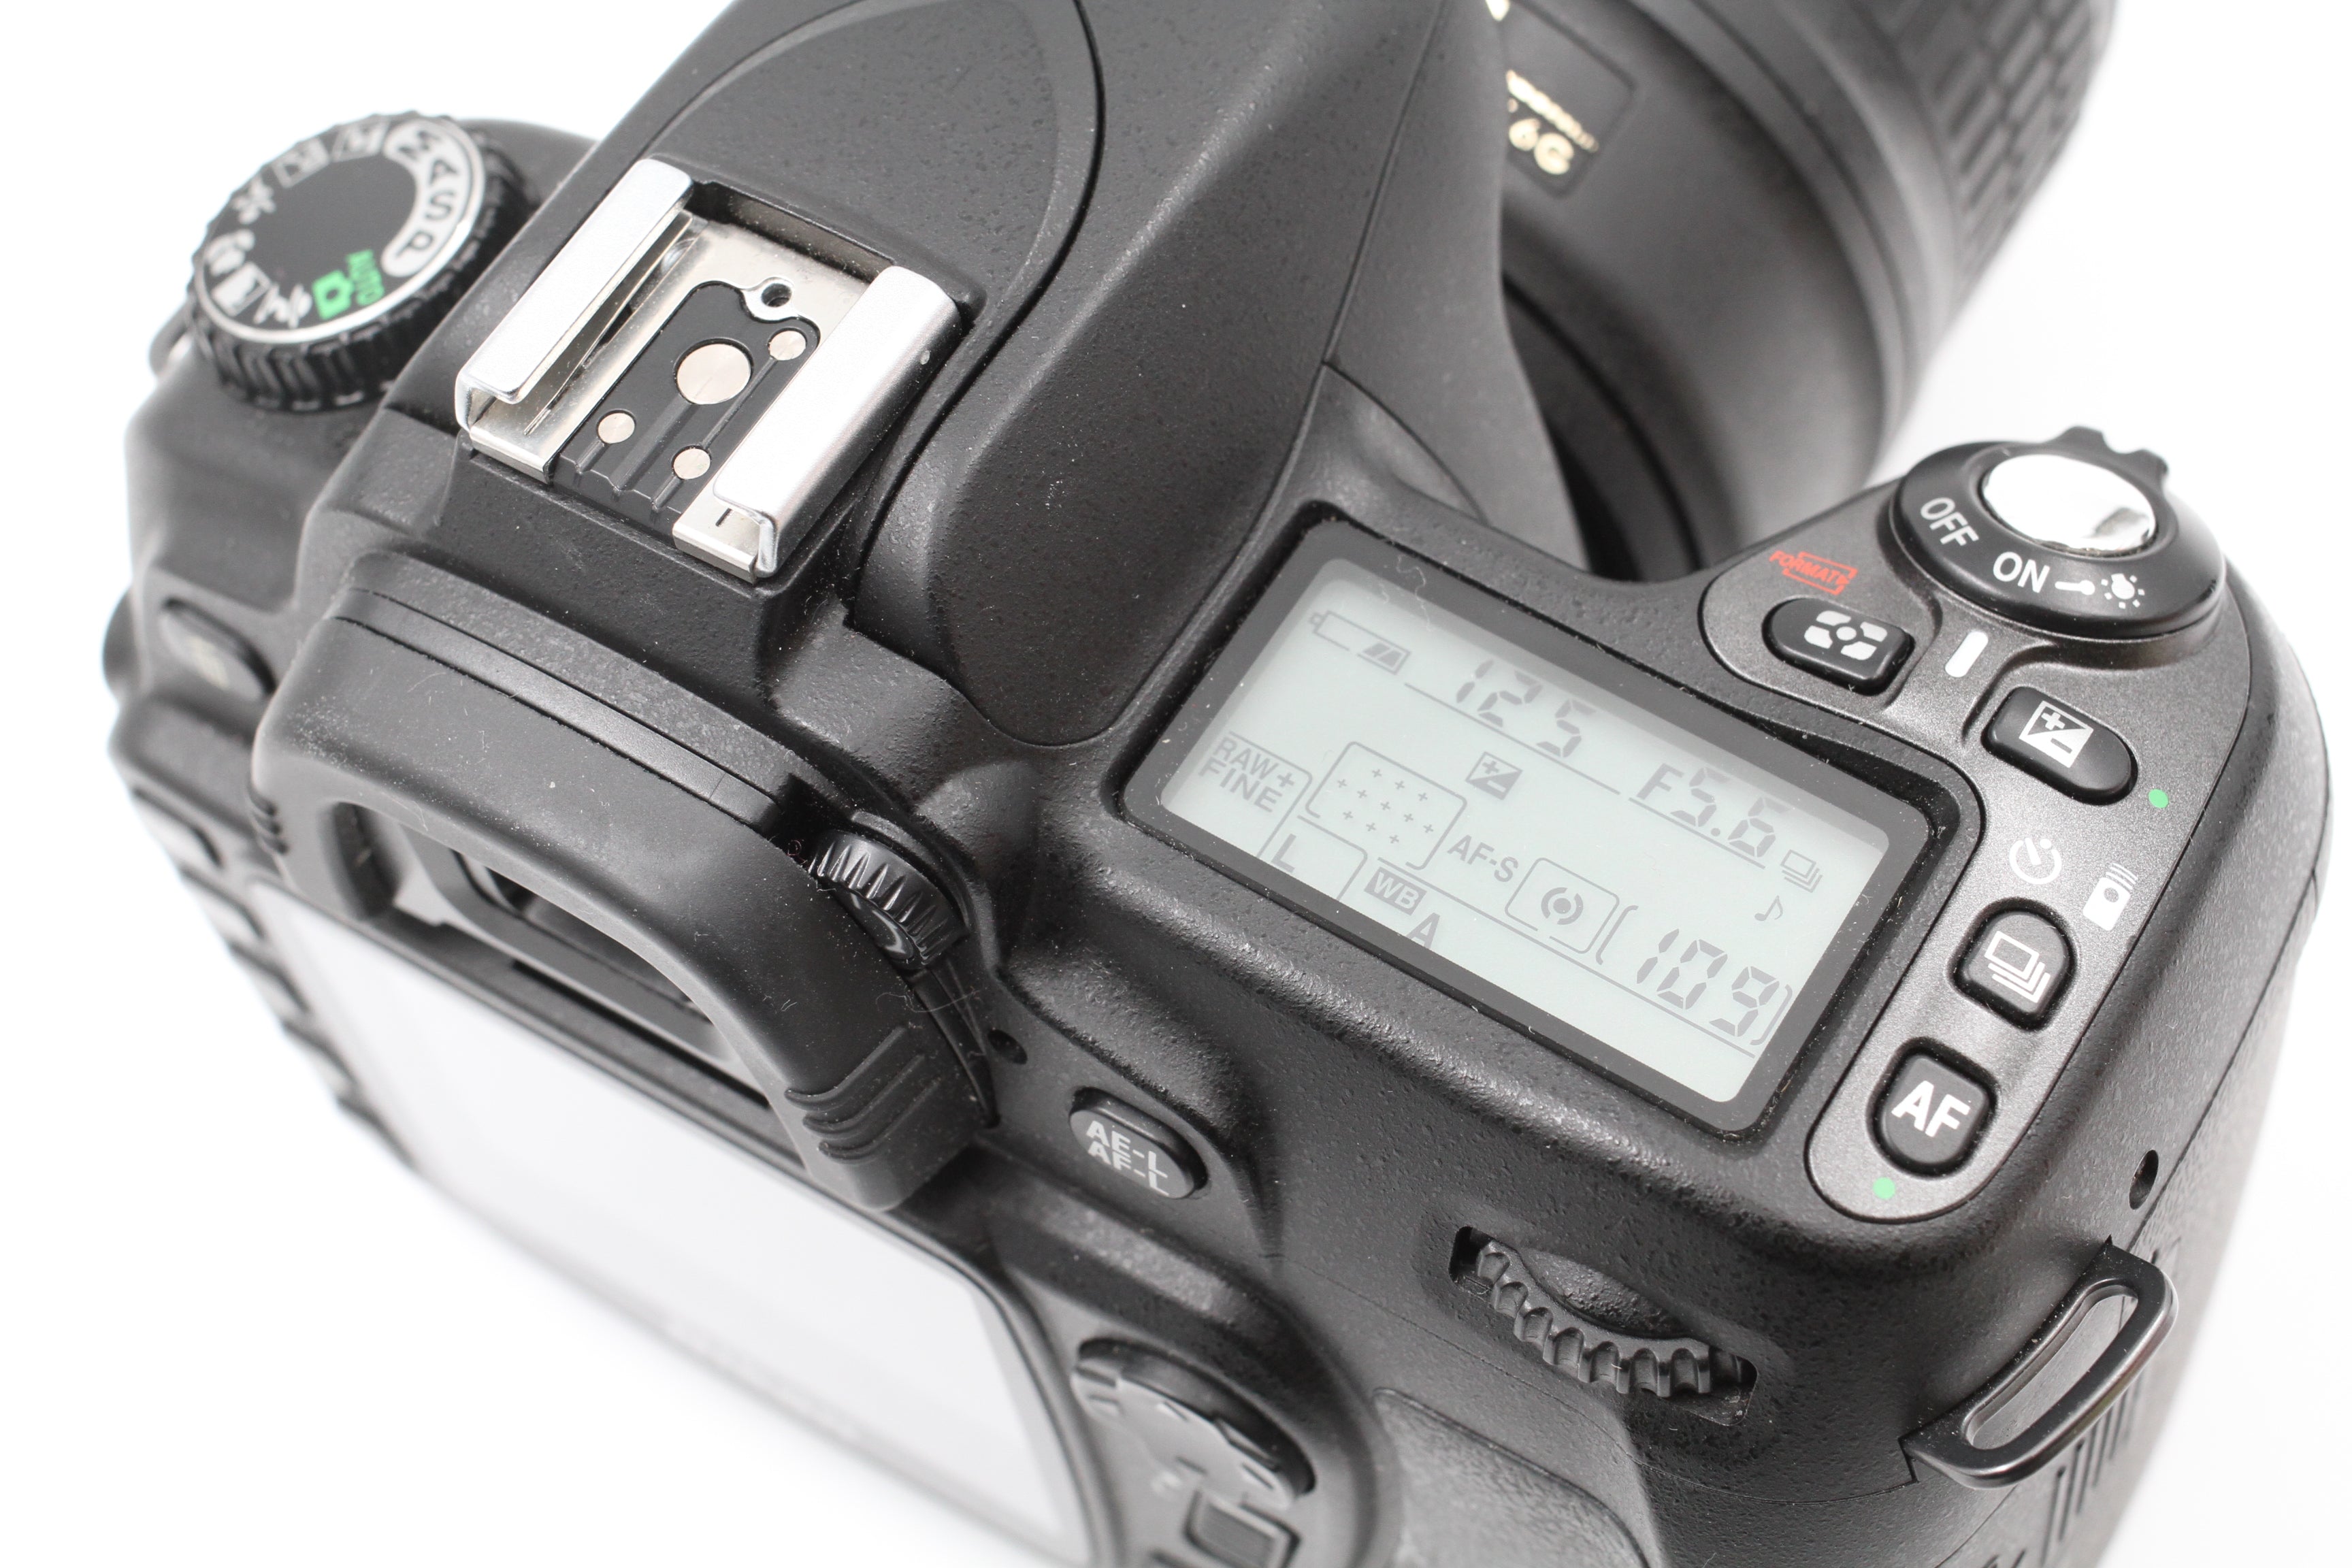 Nikon D80 DSLR Body w/ 18-55mm VR Lens